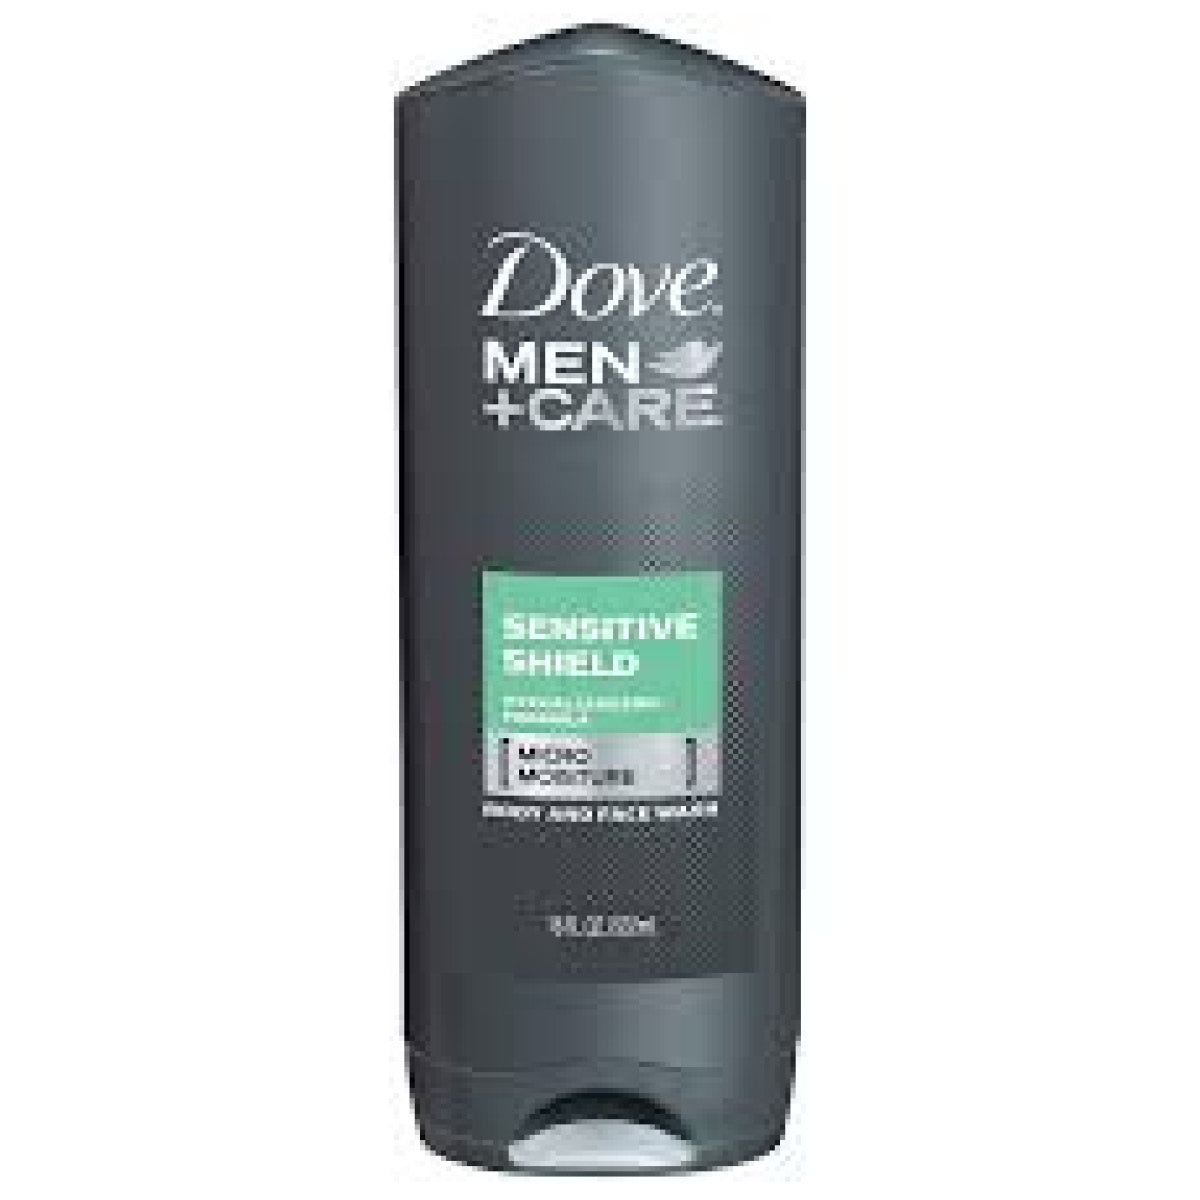 Dove Men's Body Wash Sensitive Shield, 400ml